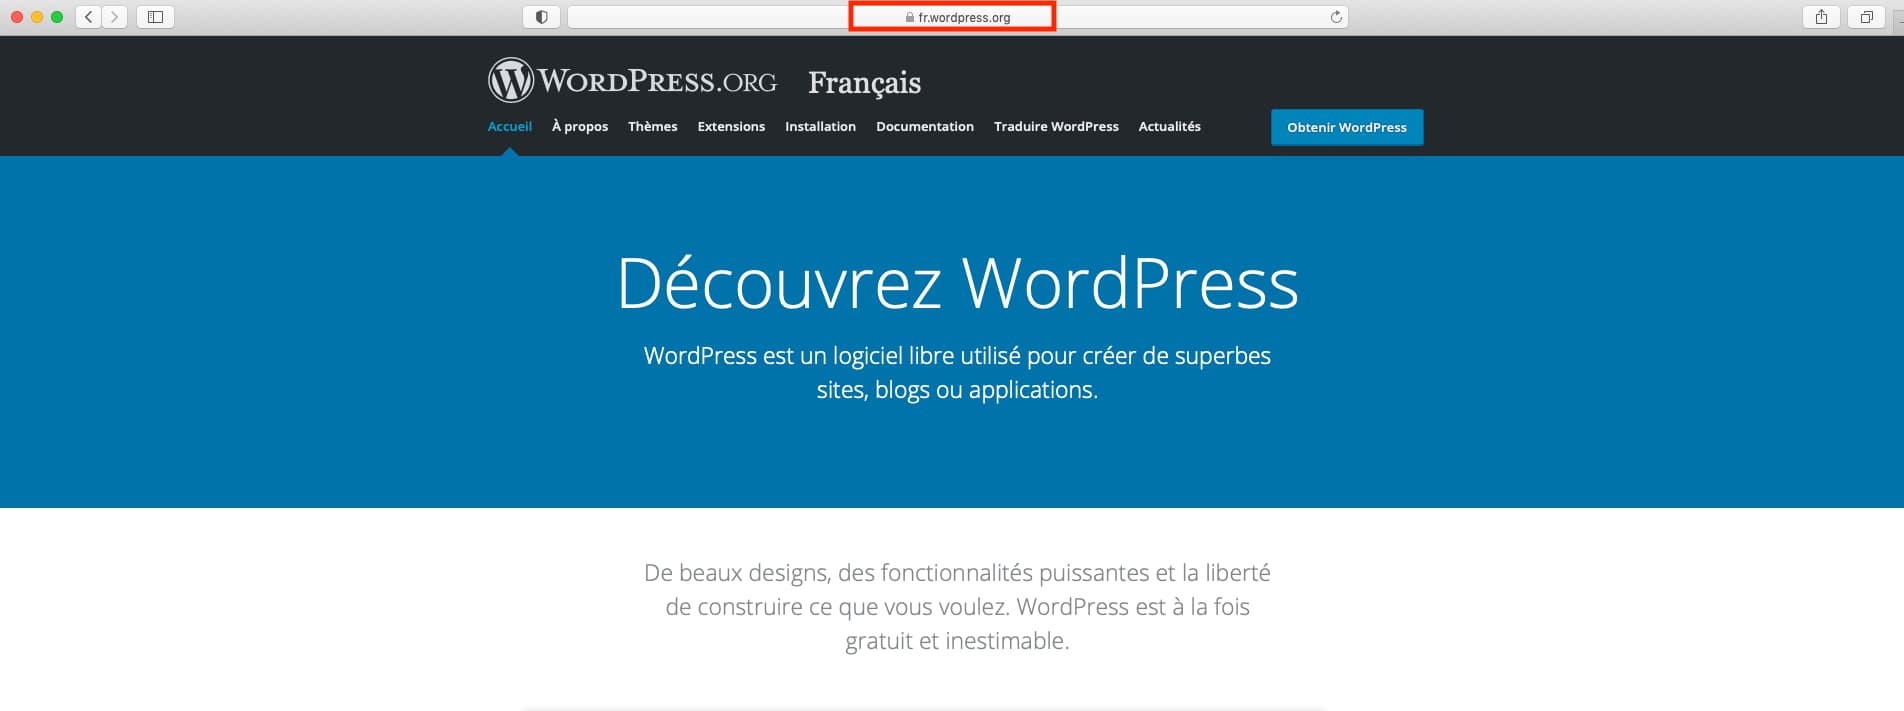 es.wordpress.org en francia